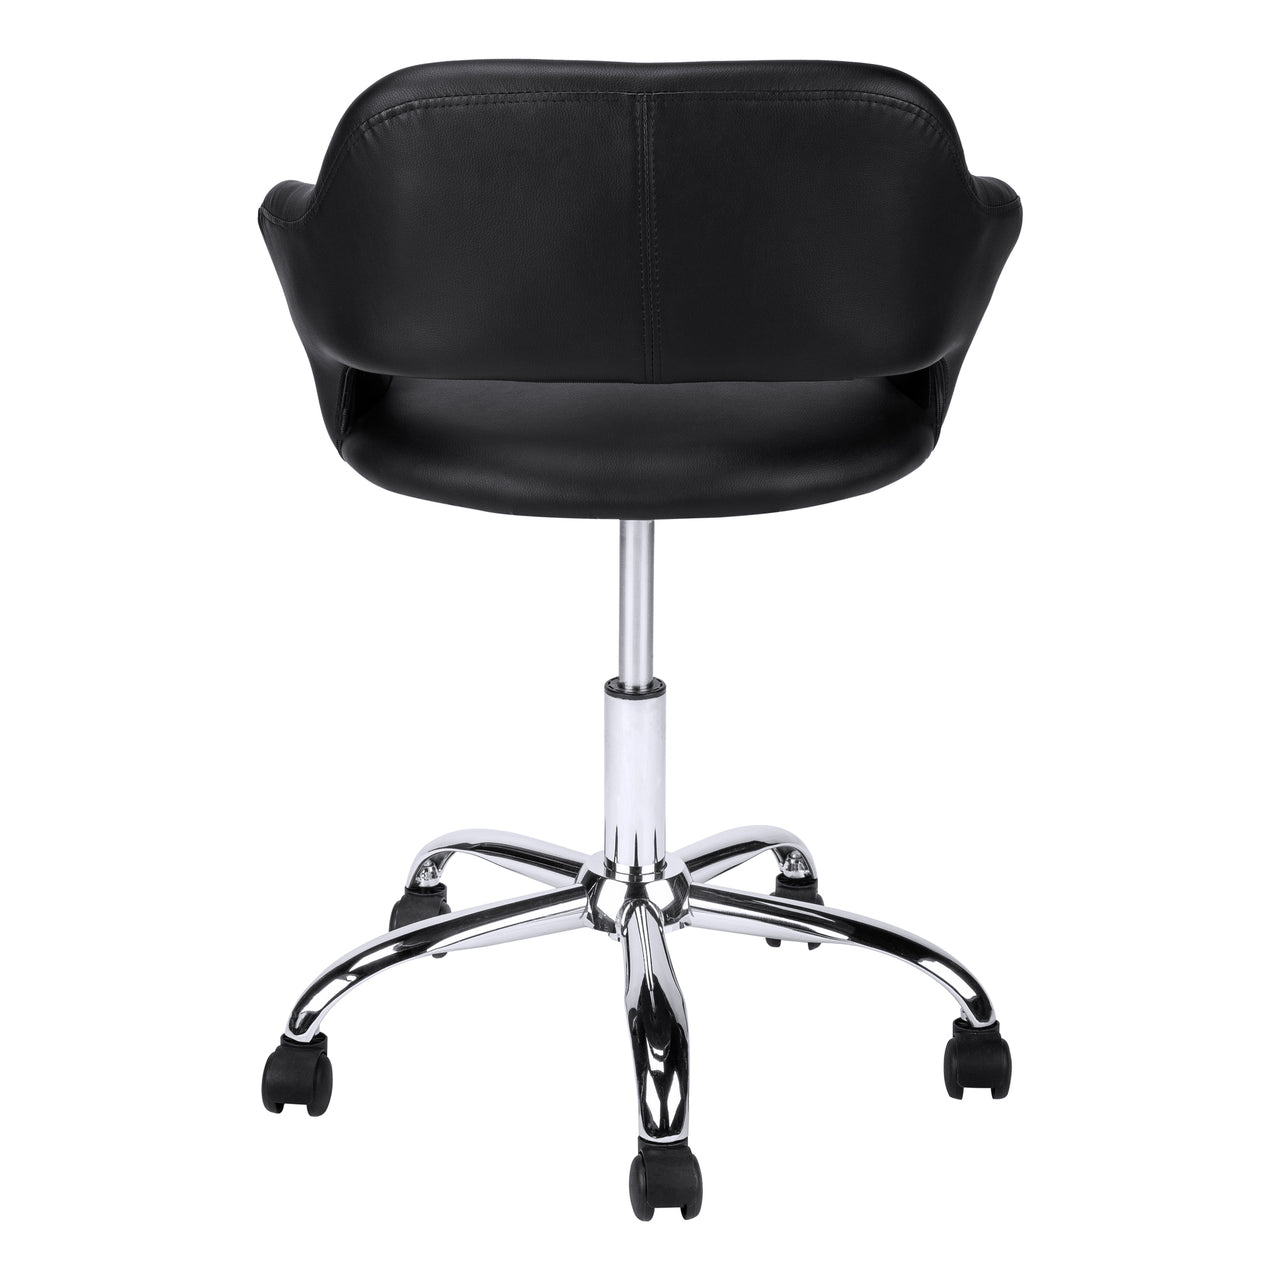 21" x 22.5" x 29" BlackChrome Metal Hydraulic Lift Base  Office Chair-1